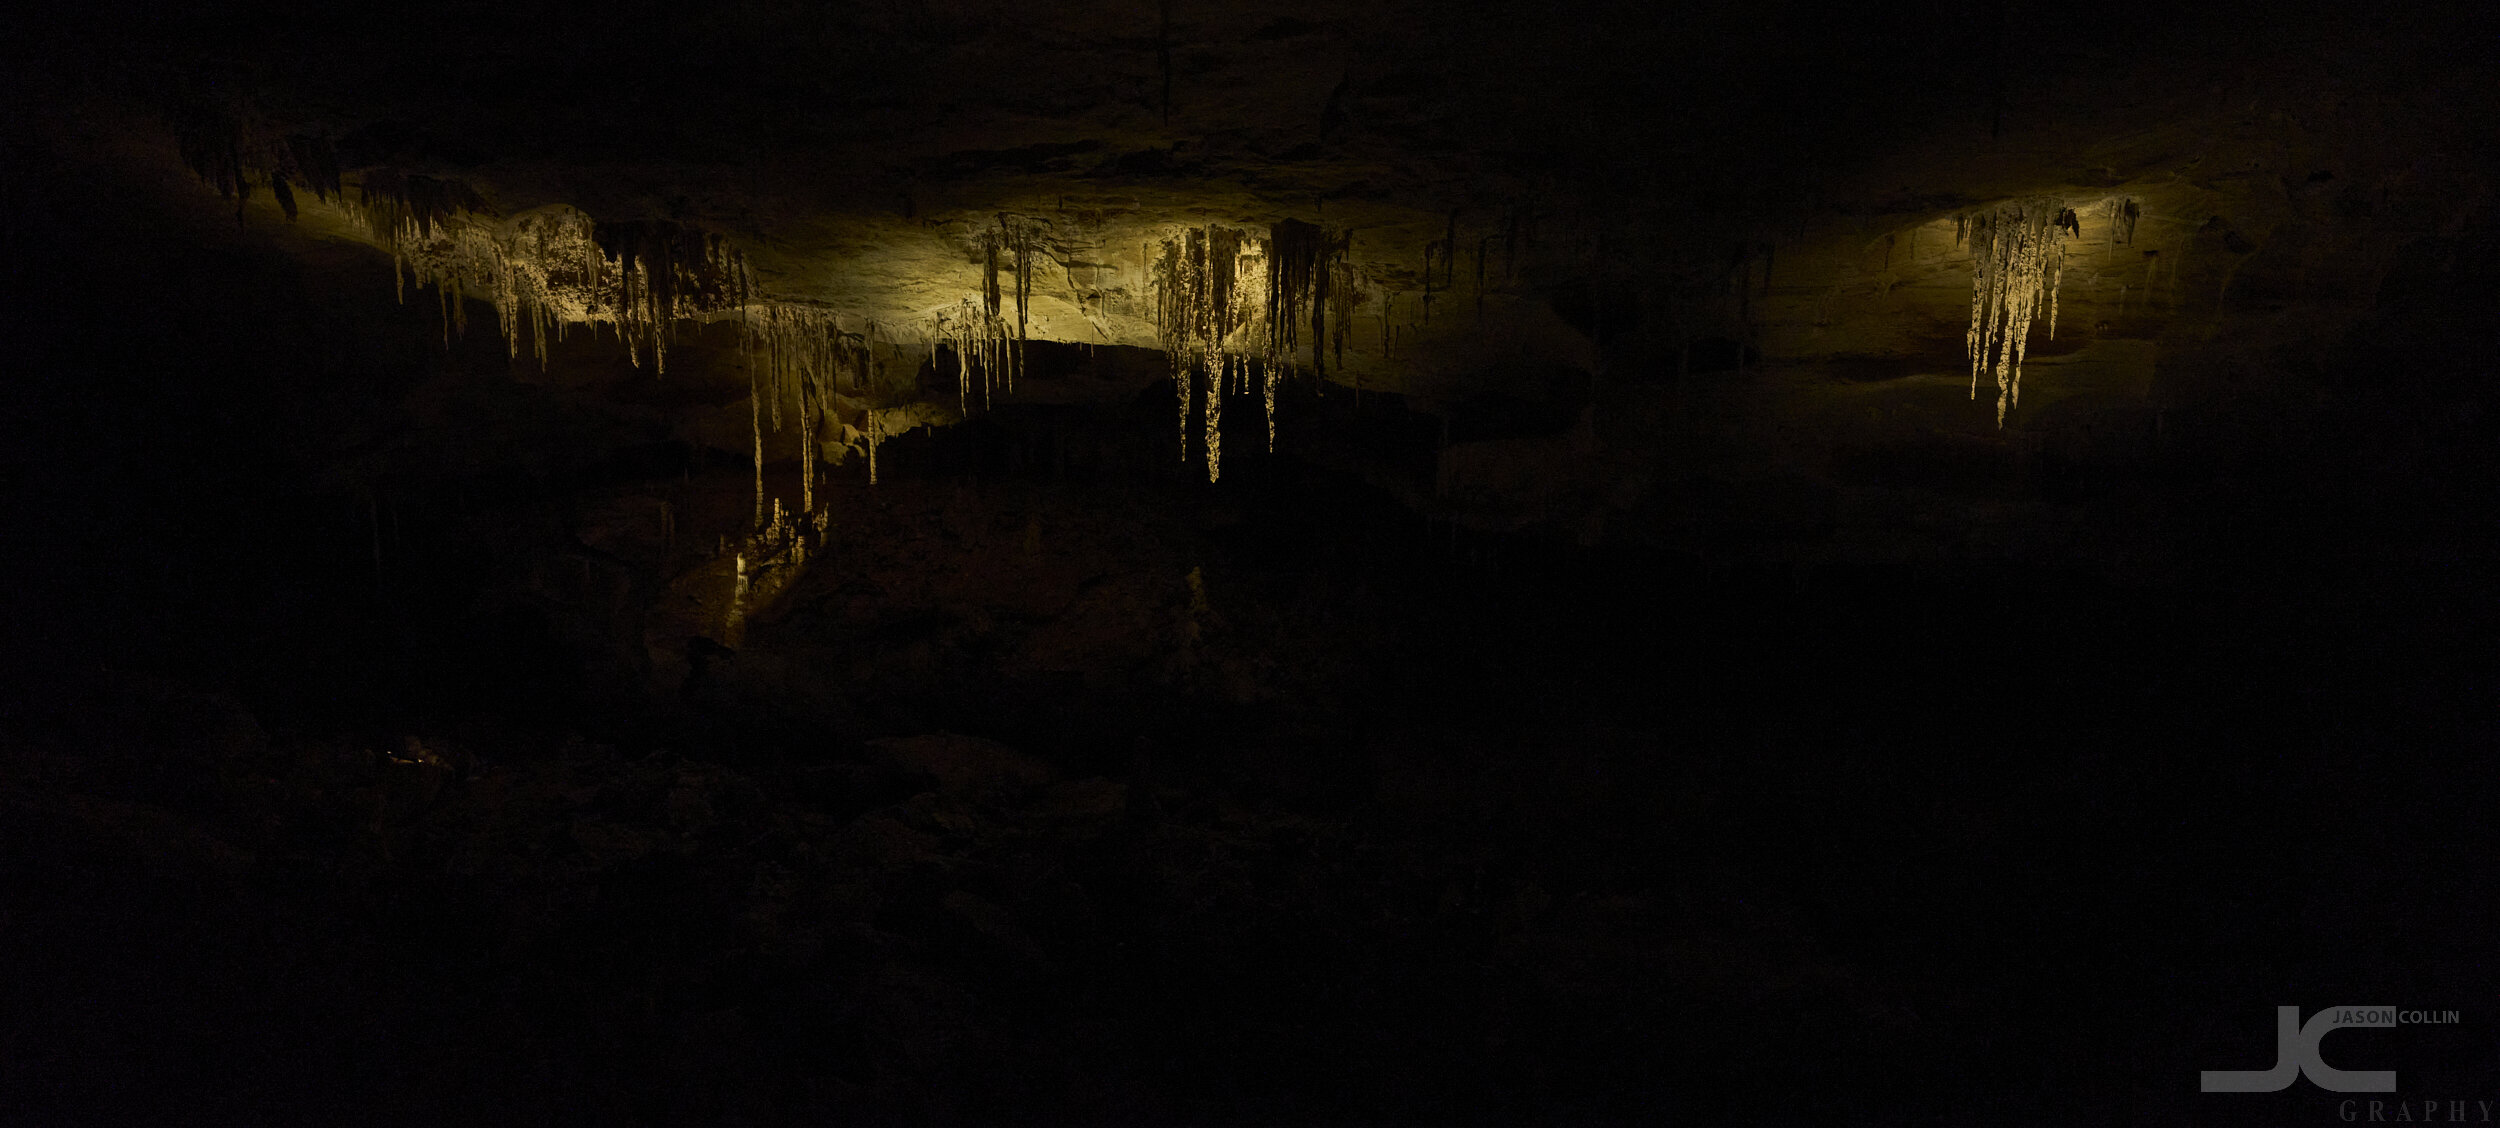 carlsbad-caverns-7-10-2021-nm-23449.jpg